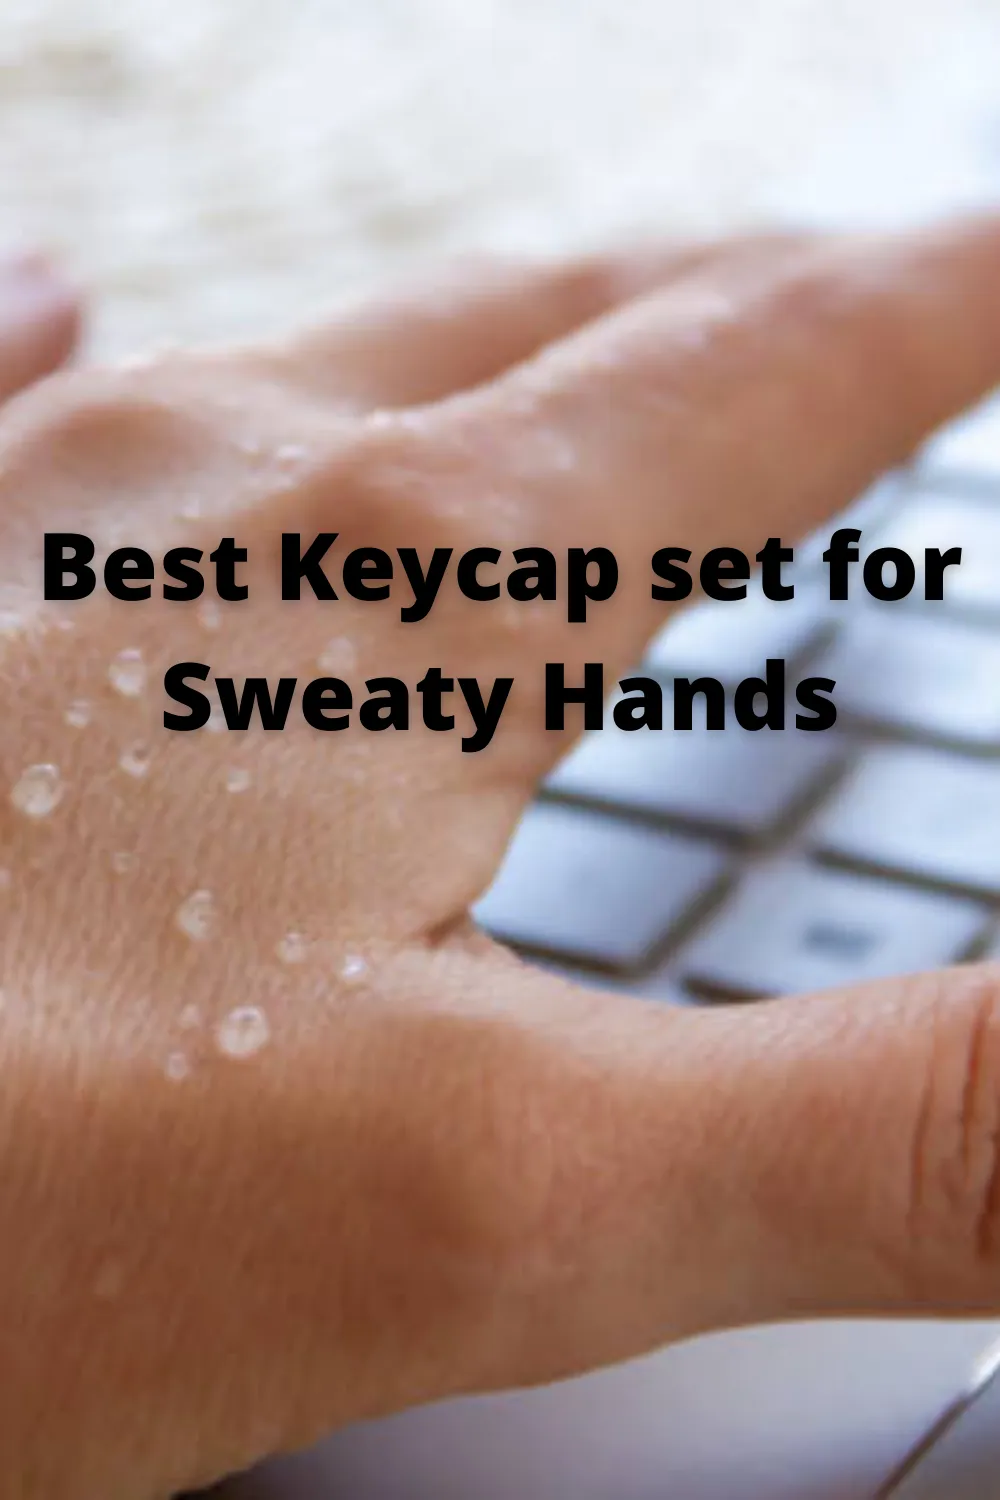 Best Keycap set for Sweaty Hands